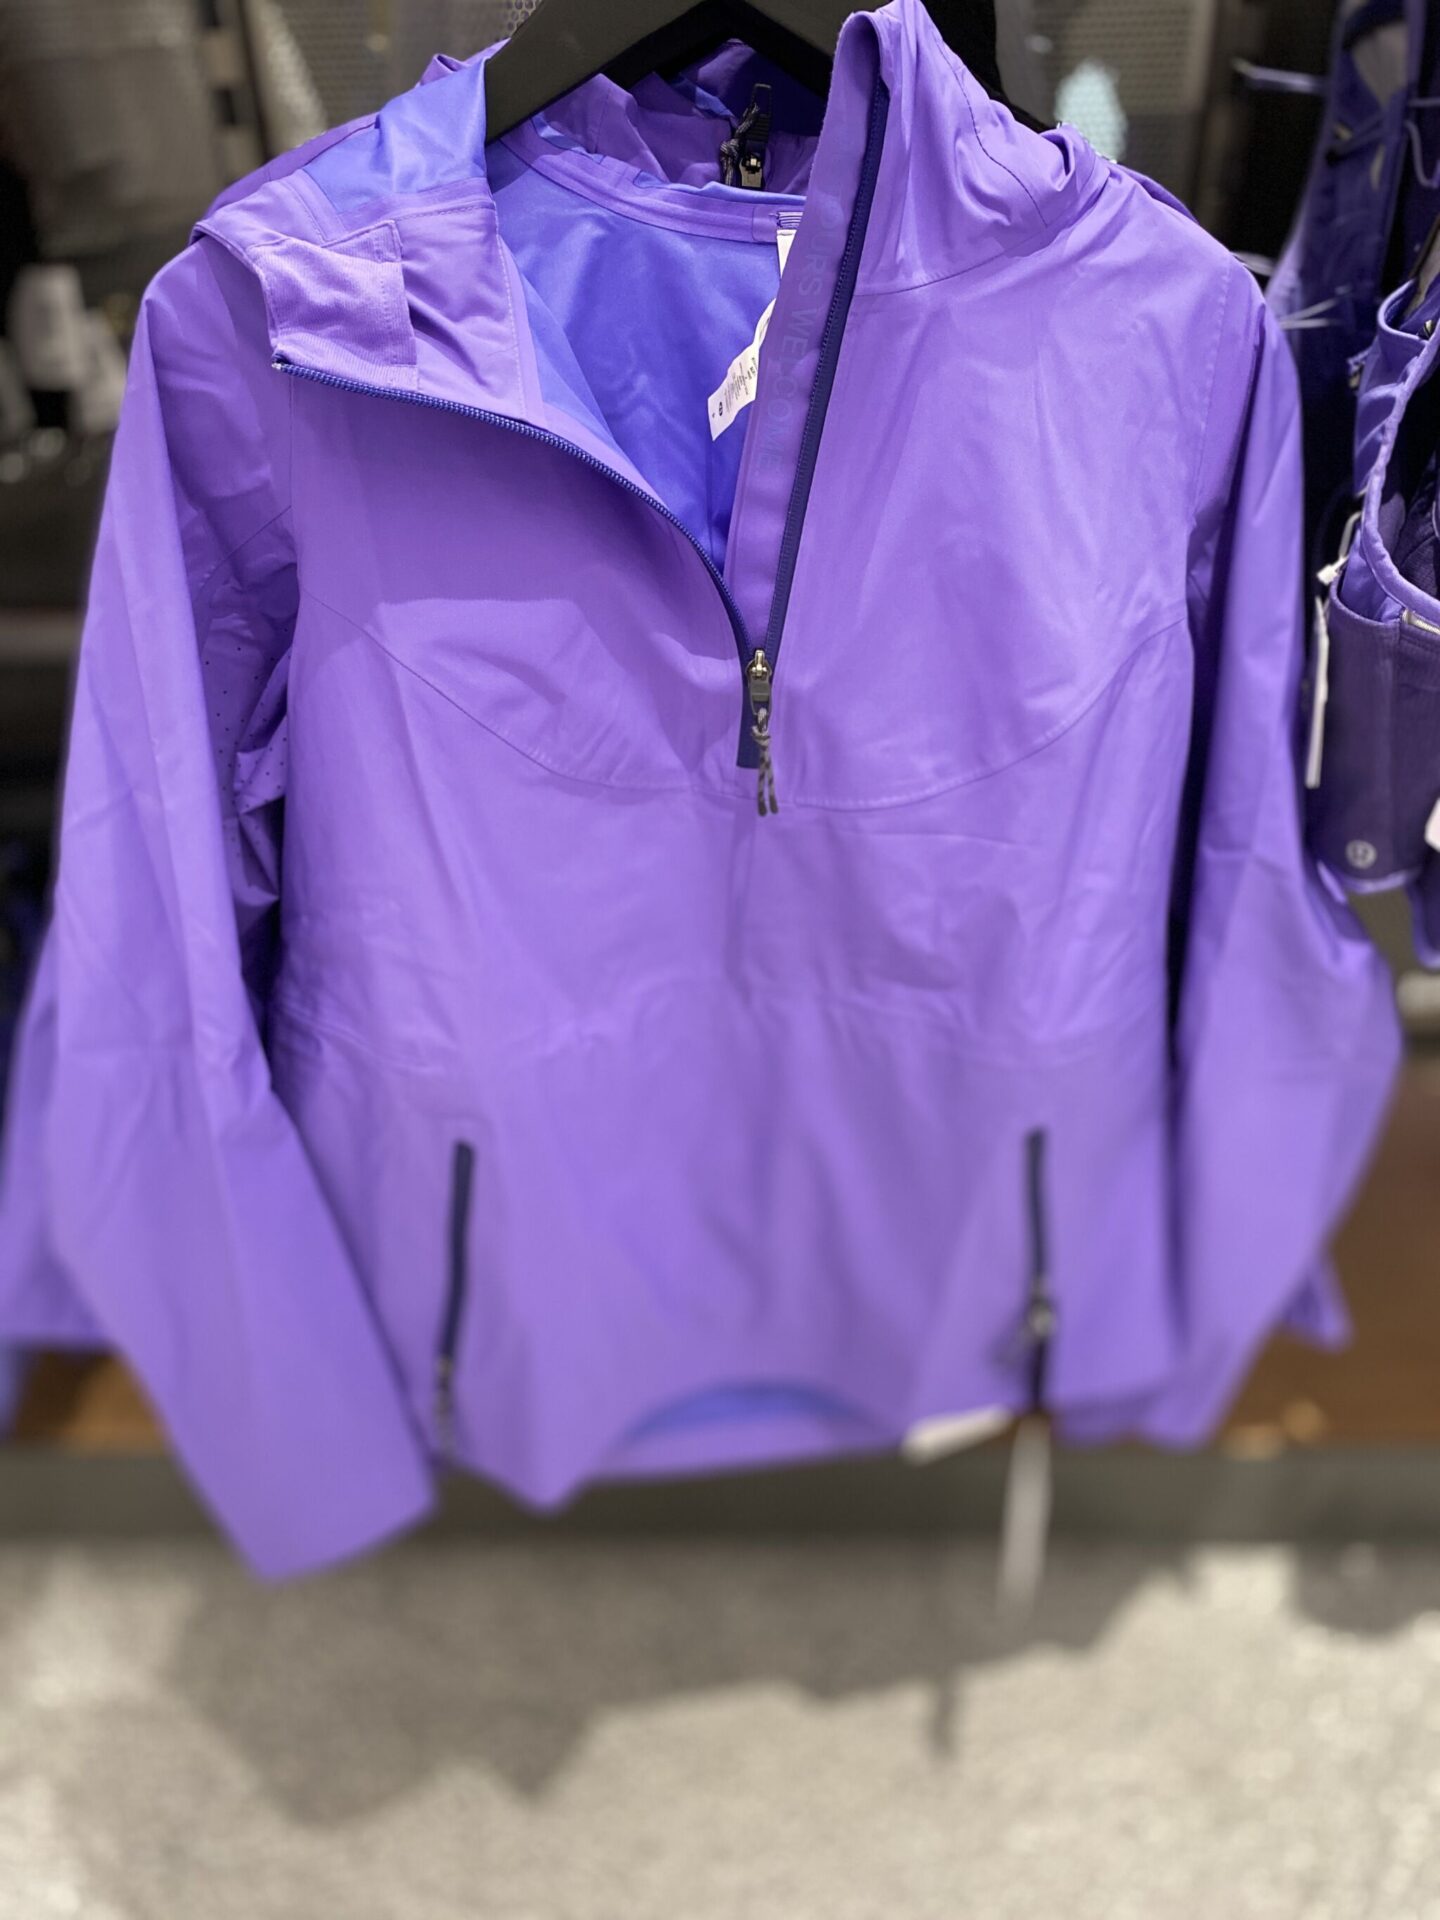 New lululemon jacket: need a lightweight hiking jacket thats waterproof?